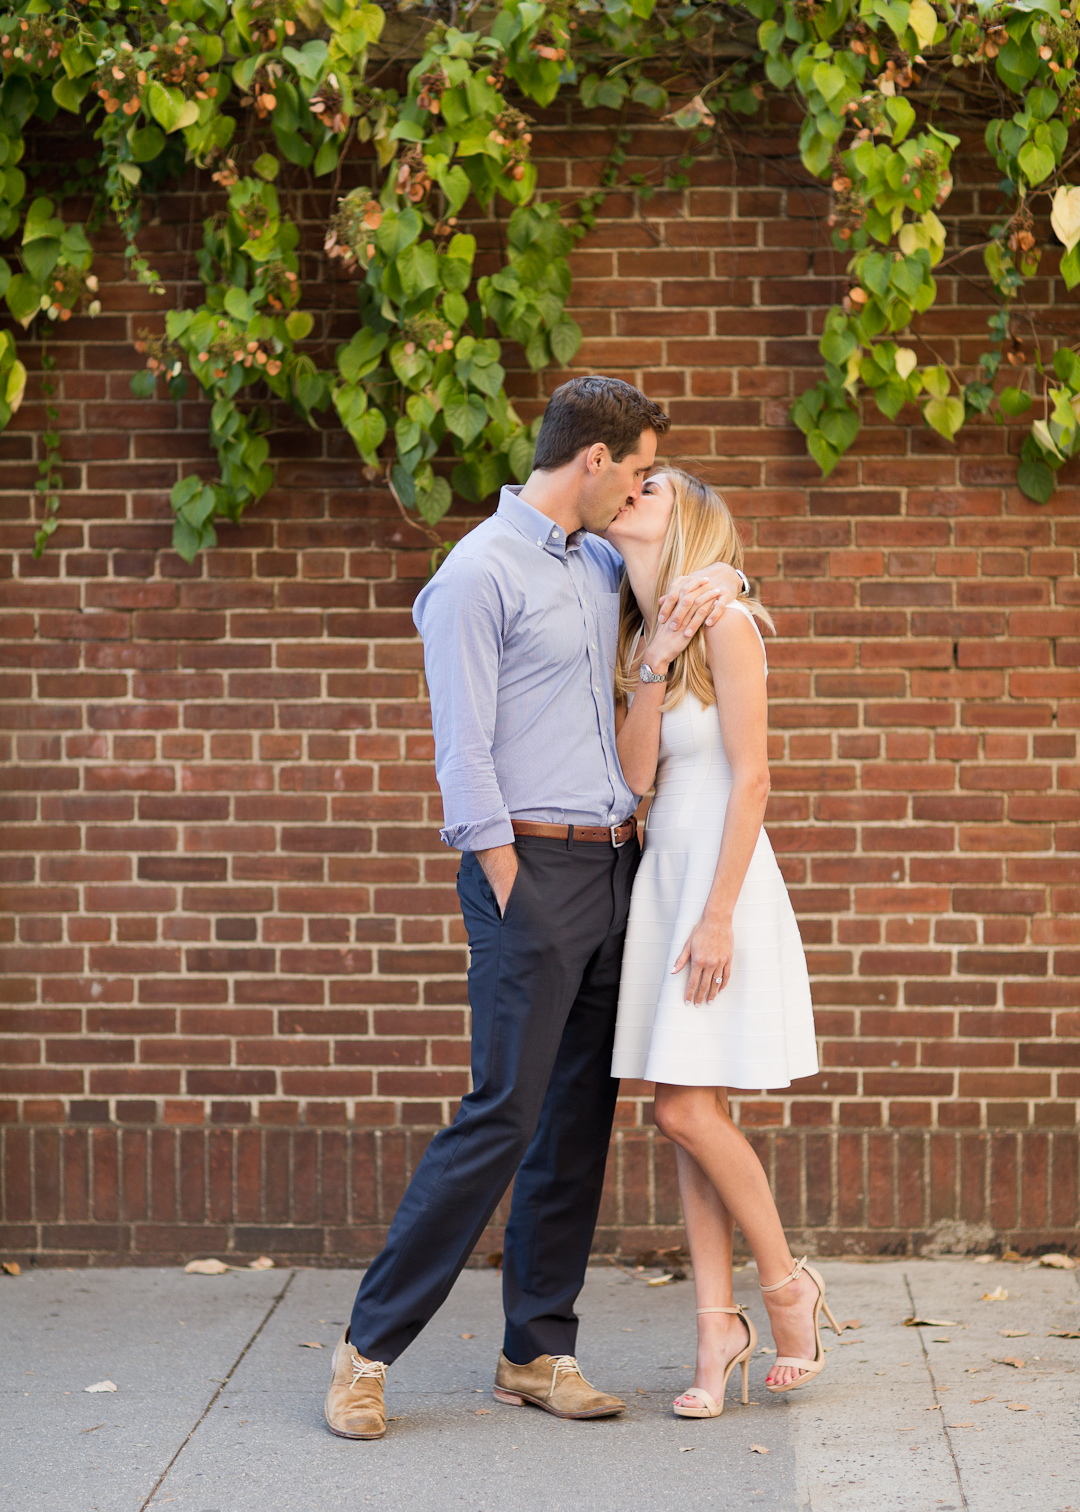 Melissa Kruse Photography - Daniece & Chris West Village Engagement Photos-71.jpg